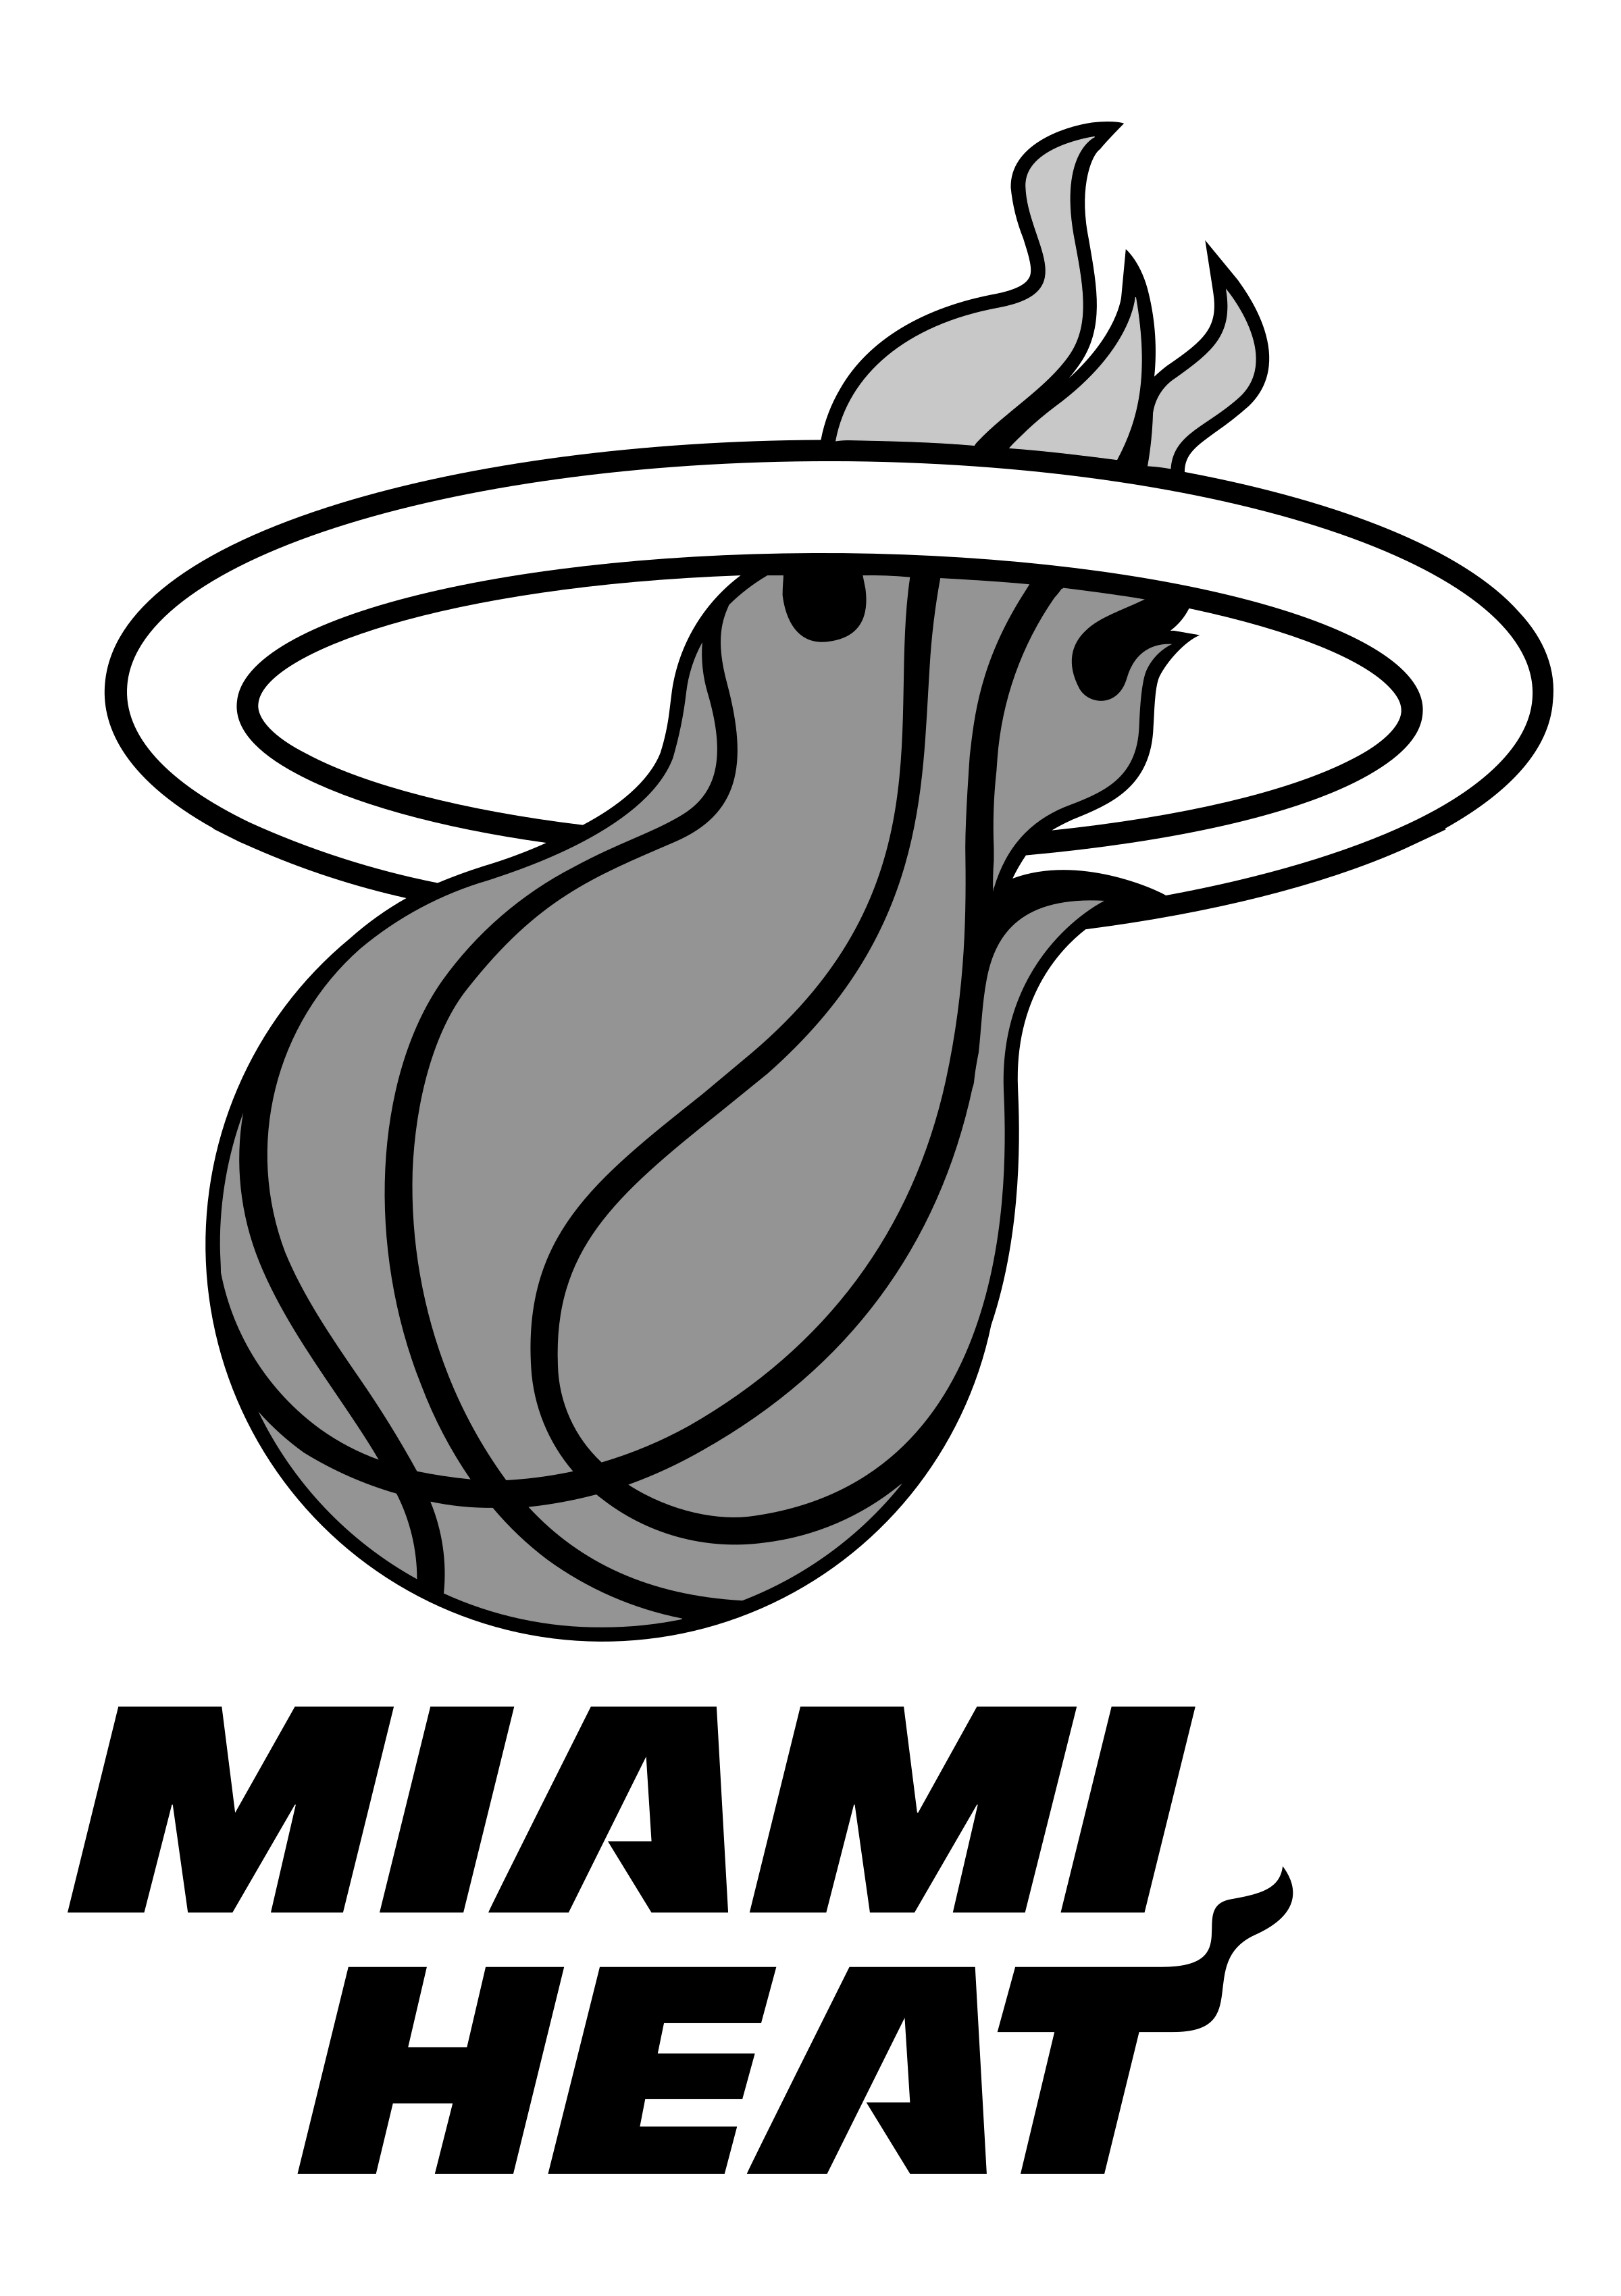 Heat Logo - Miami Heat Logo PNG Transparent & SVG Vector - Freebie Supply